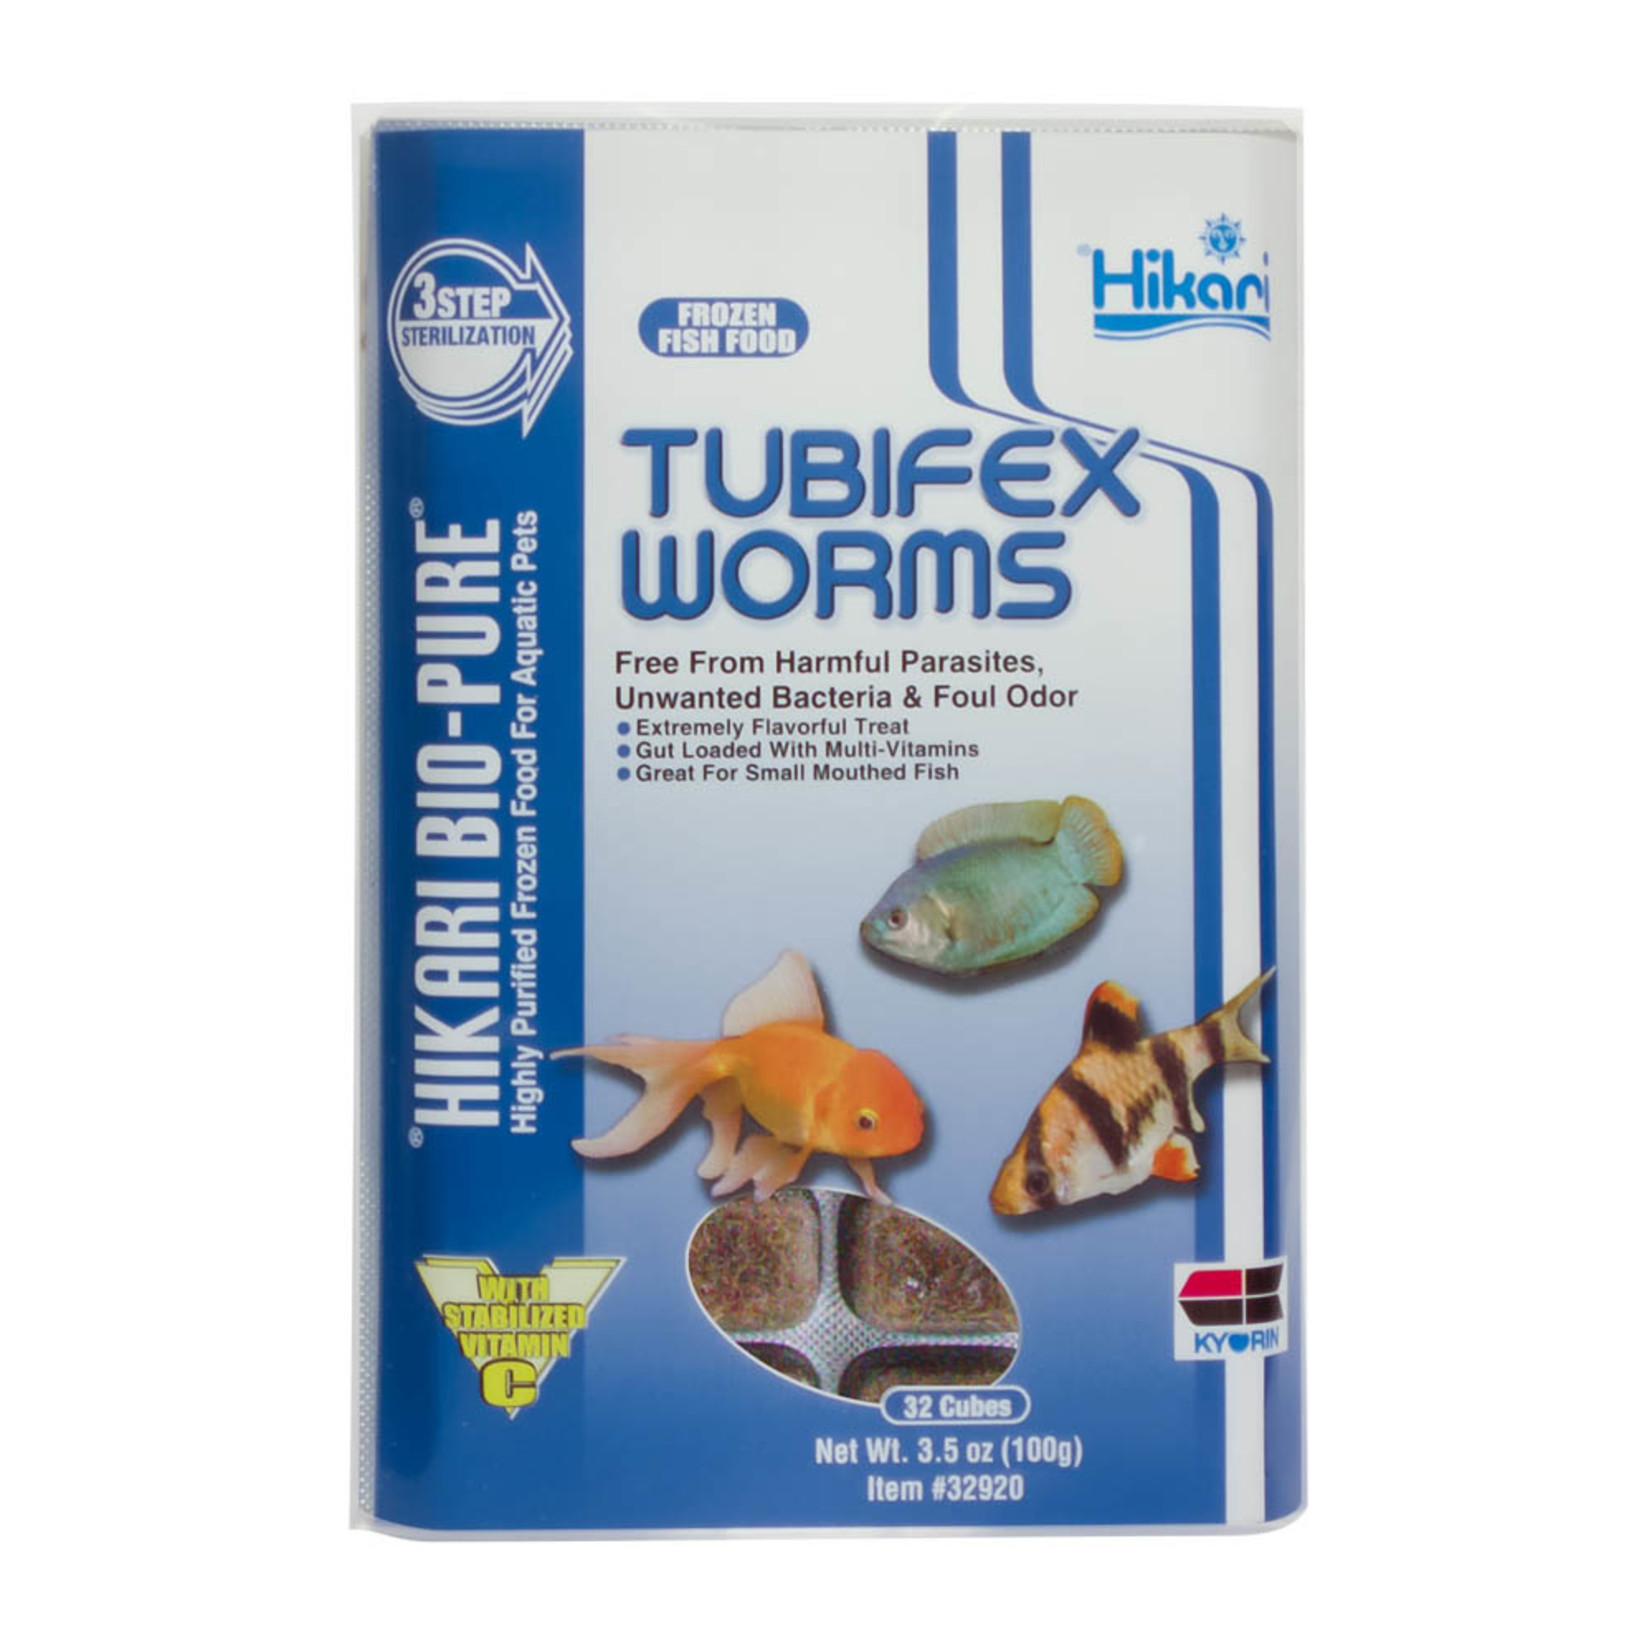 HIKARI USA INC. Frozen Tubifex Worms Cubes